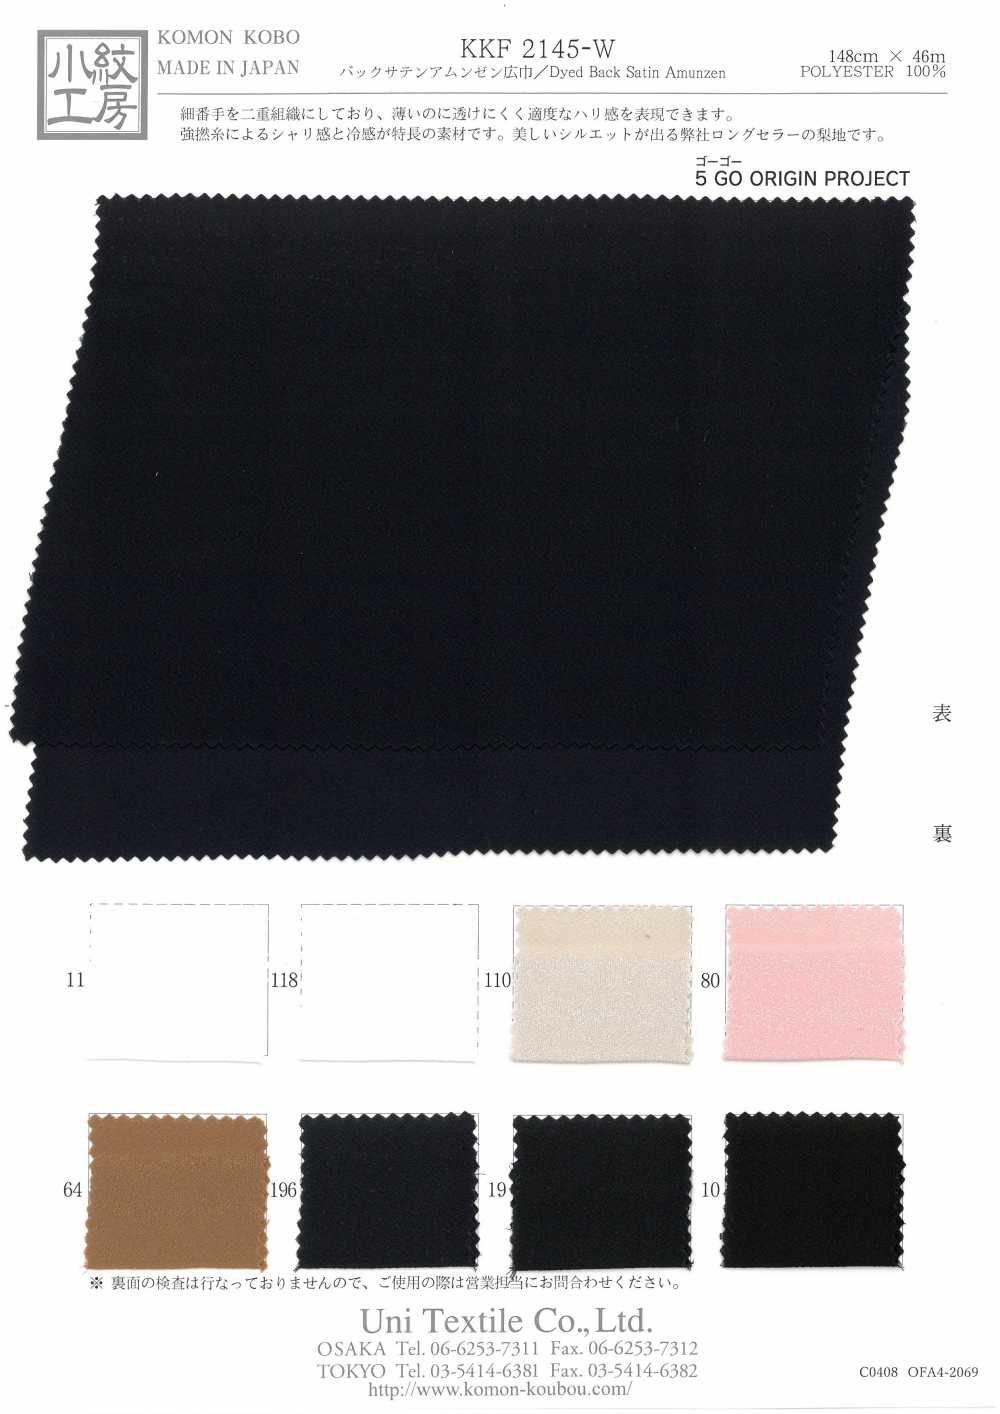 KKF2145-W Vải Back Satin Vải Sần Khổ Rộng Uni Textile